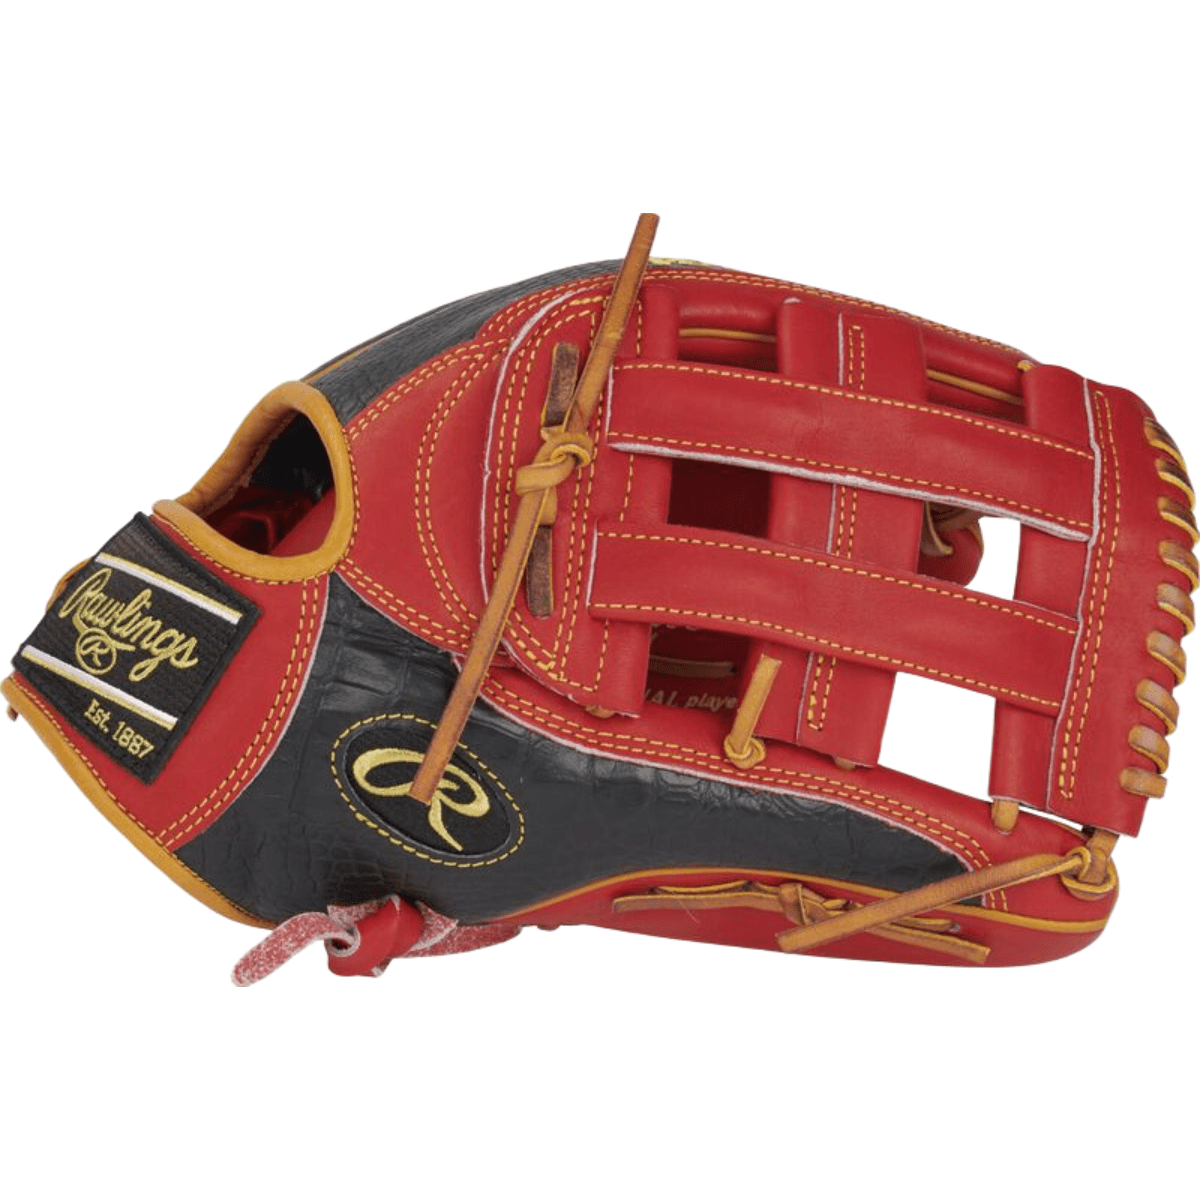 Easton Jose Ramirez Prof Youth 10.5 Baseball Glove